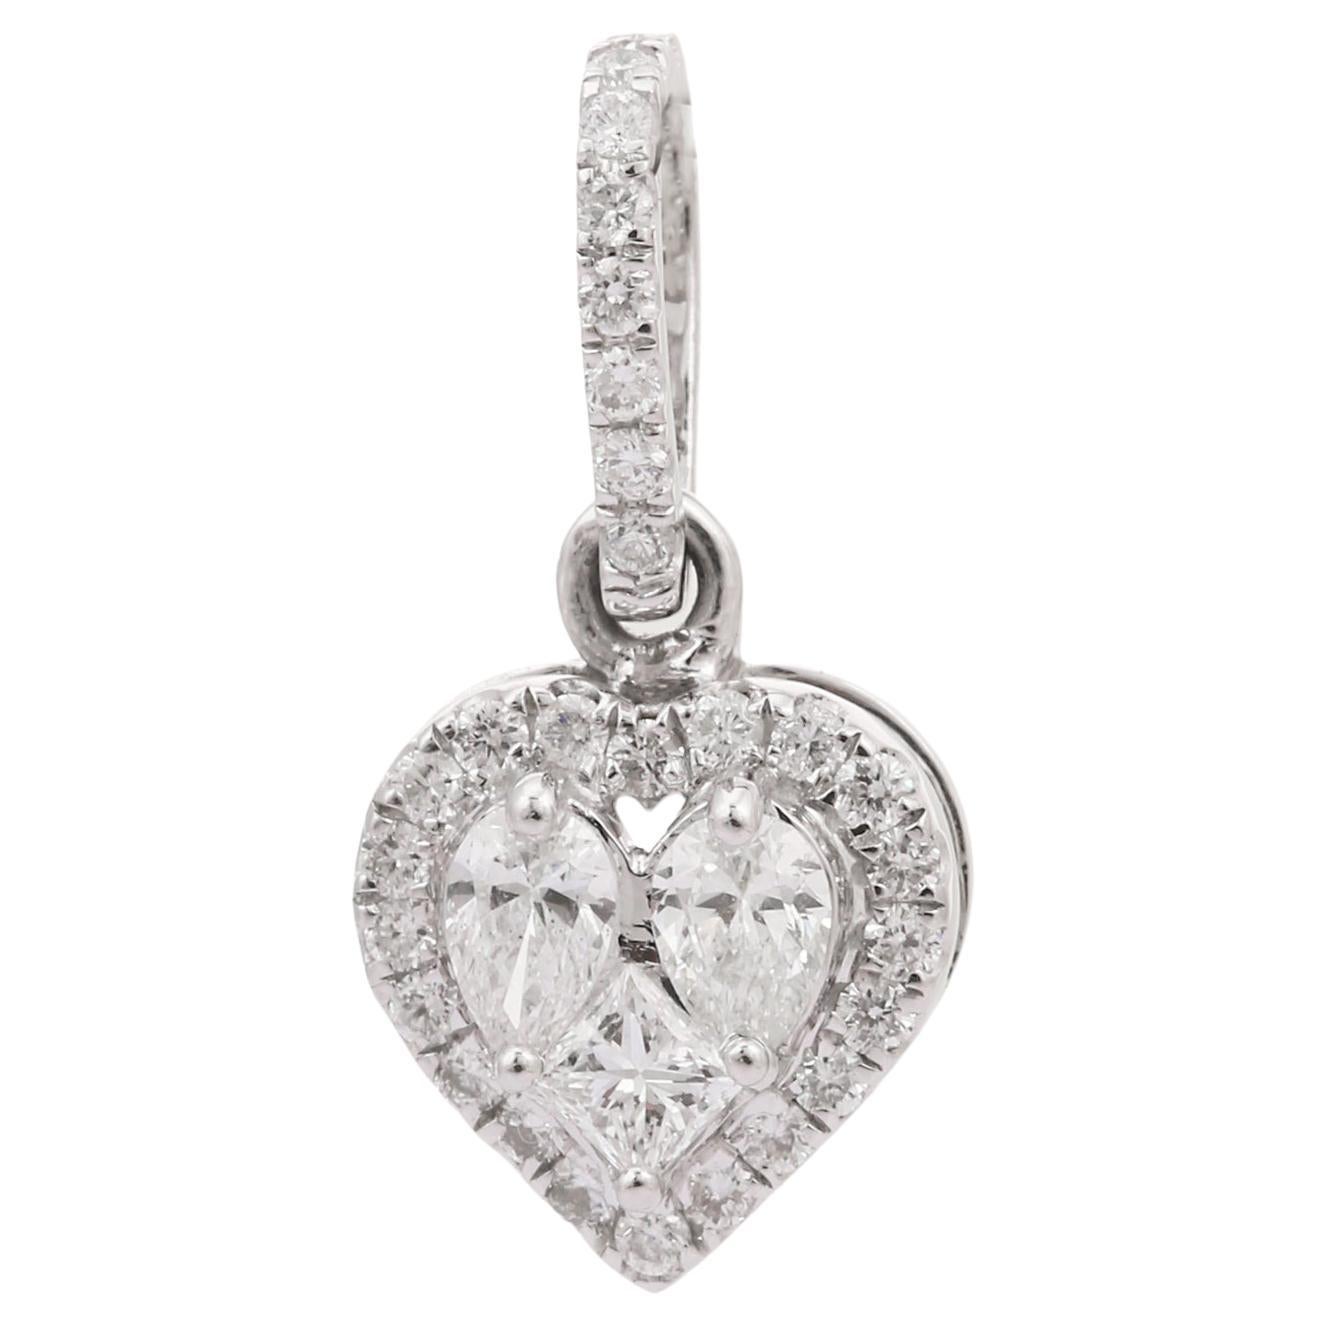 14k Solid White Gold Dainty Diamond Heart Pendentif Gift For Her, Christmas Gift